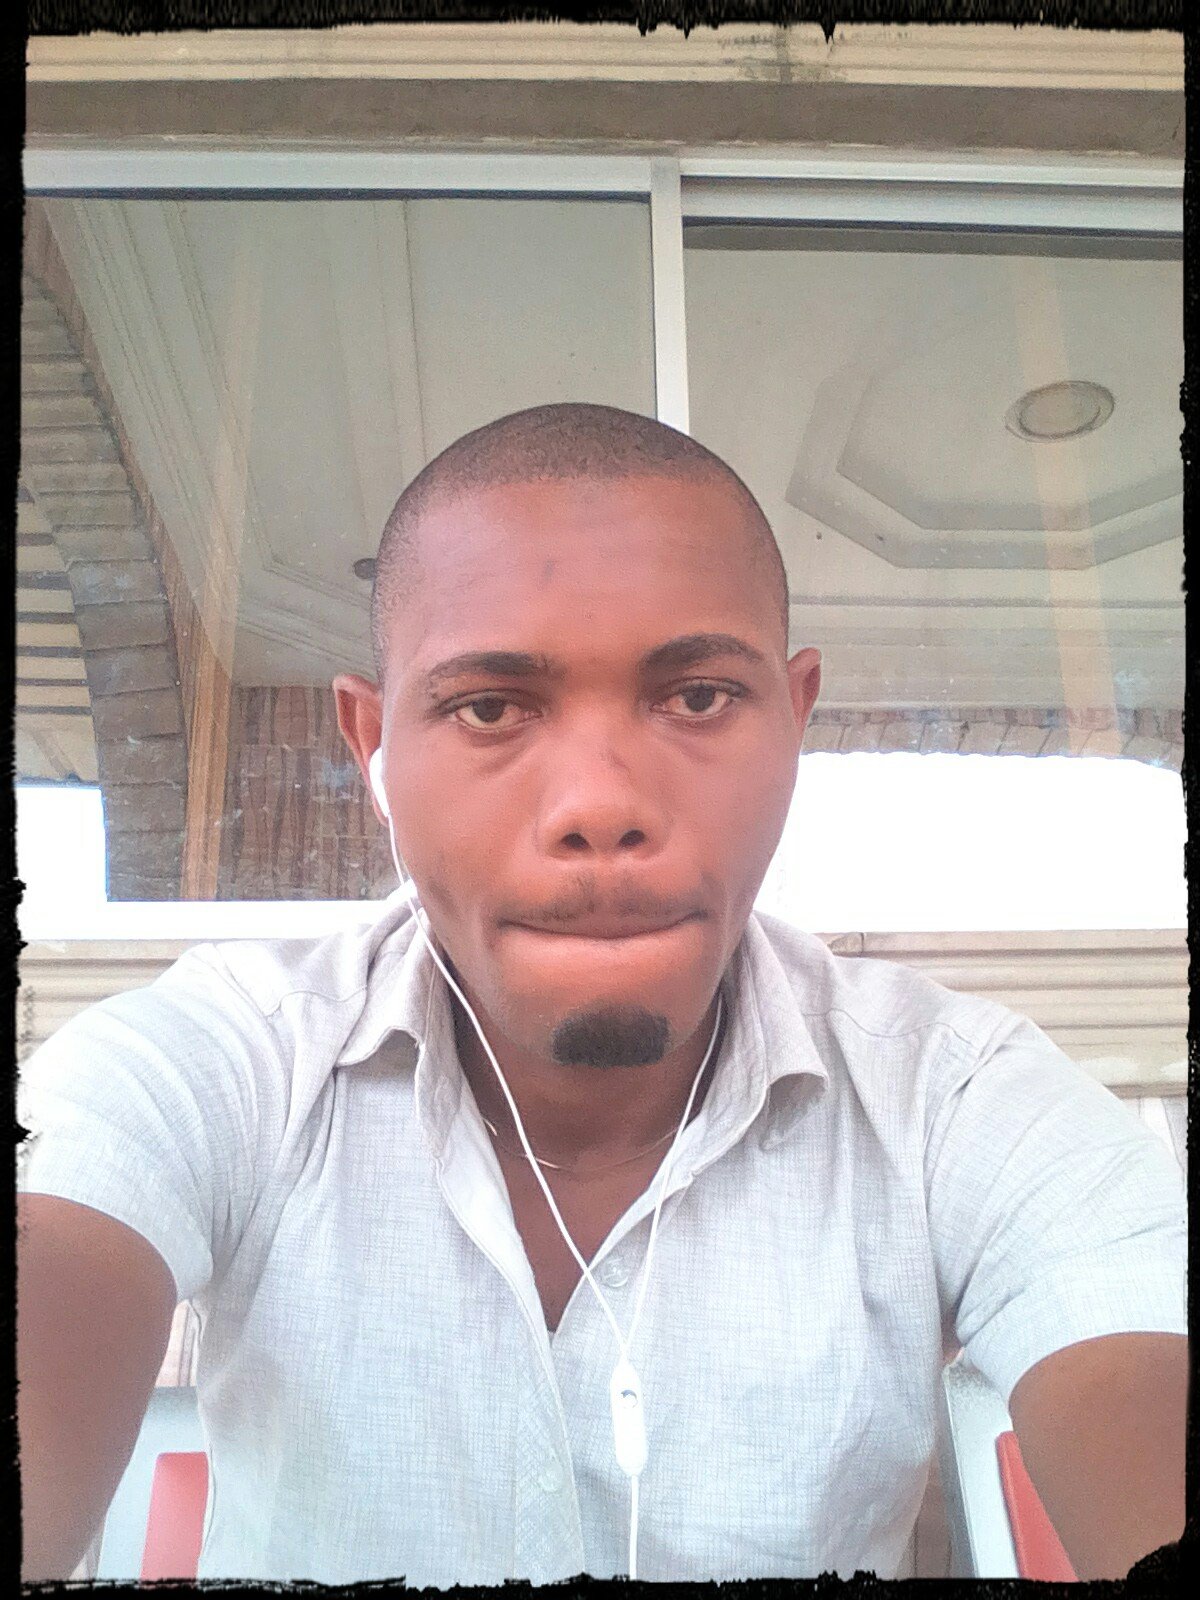 I am born into the keneware's family. A graduate of Niger Delta University, Nigeria. Am the Delta state co,ordinator of International Youth Council of Nigeria